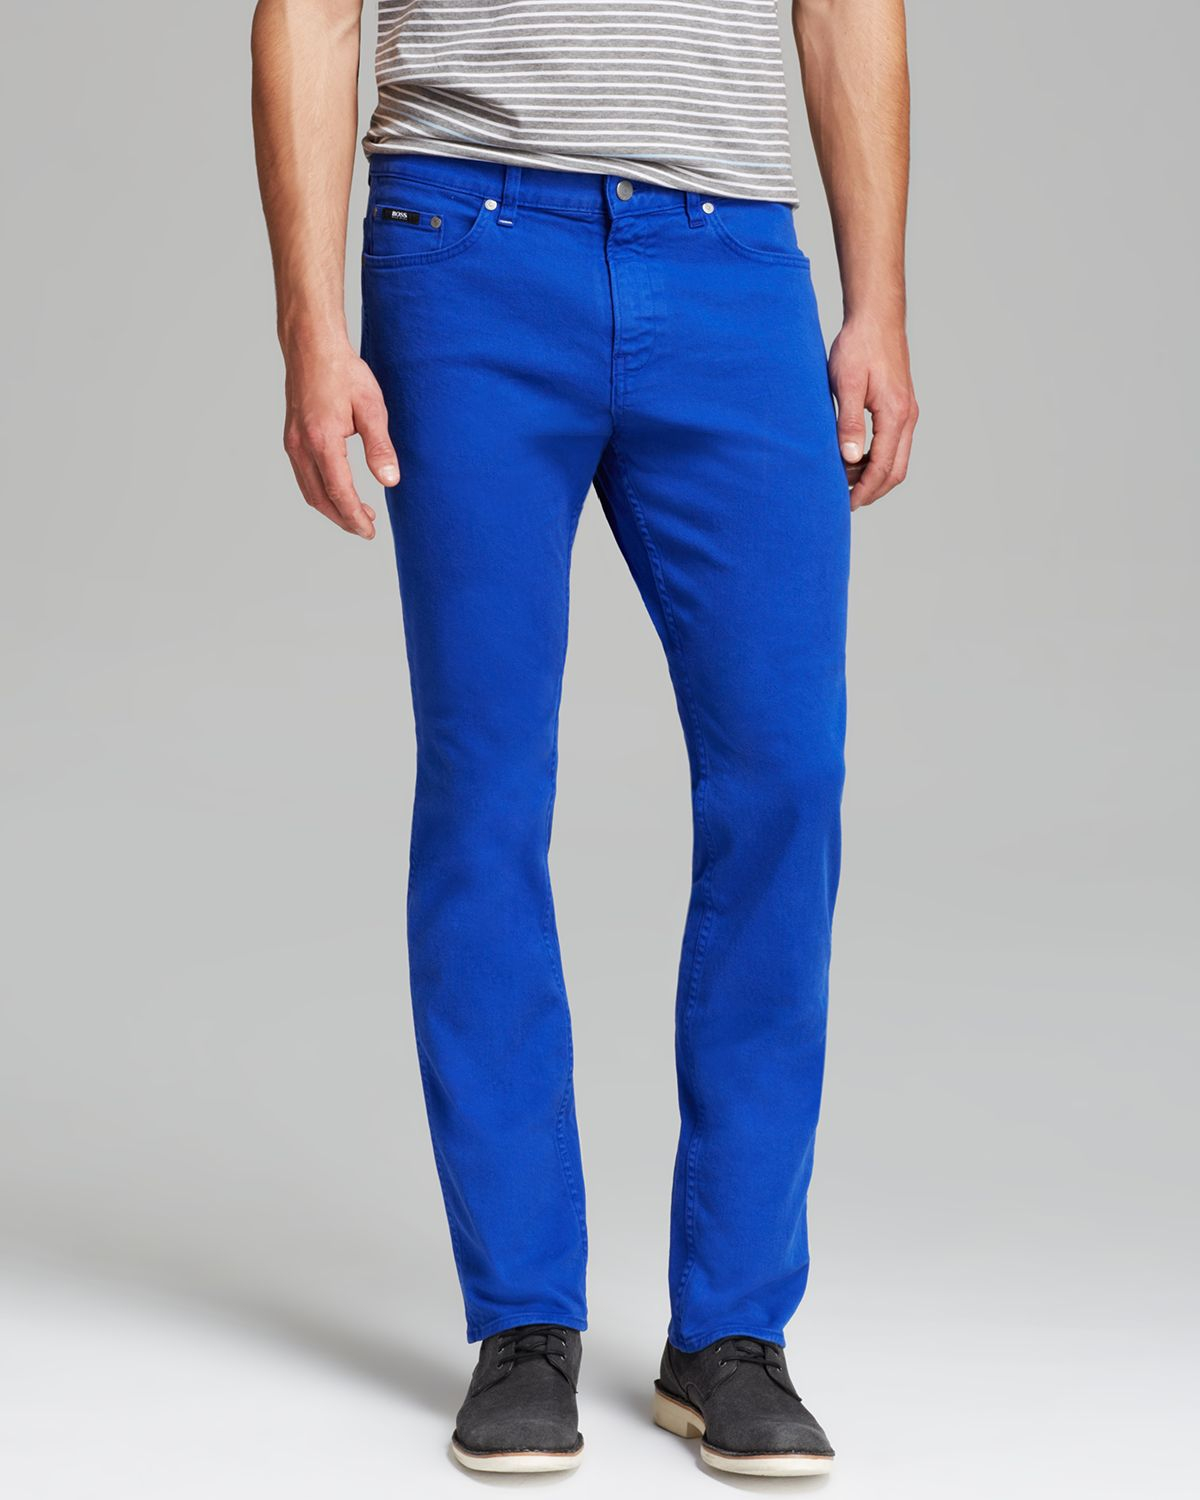 Hugo Boss Boss Jeans Delaware Slim Fit in Bright Blue in Blue for Men ...